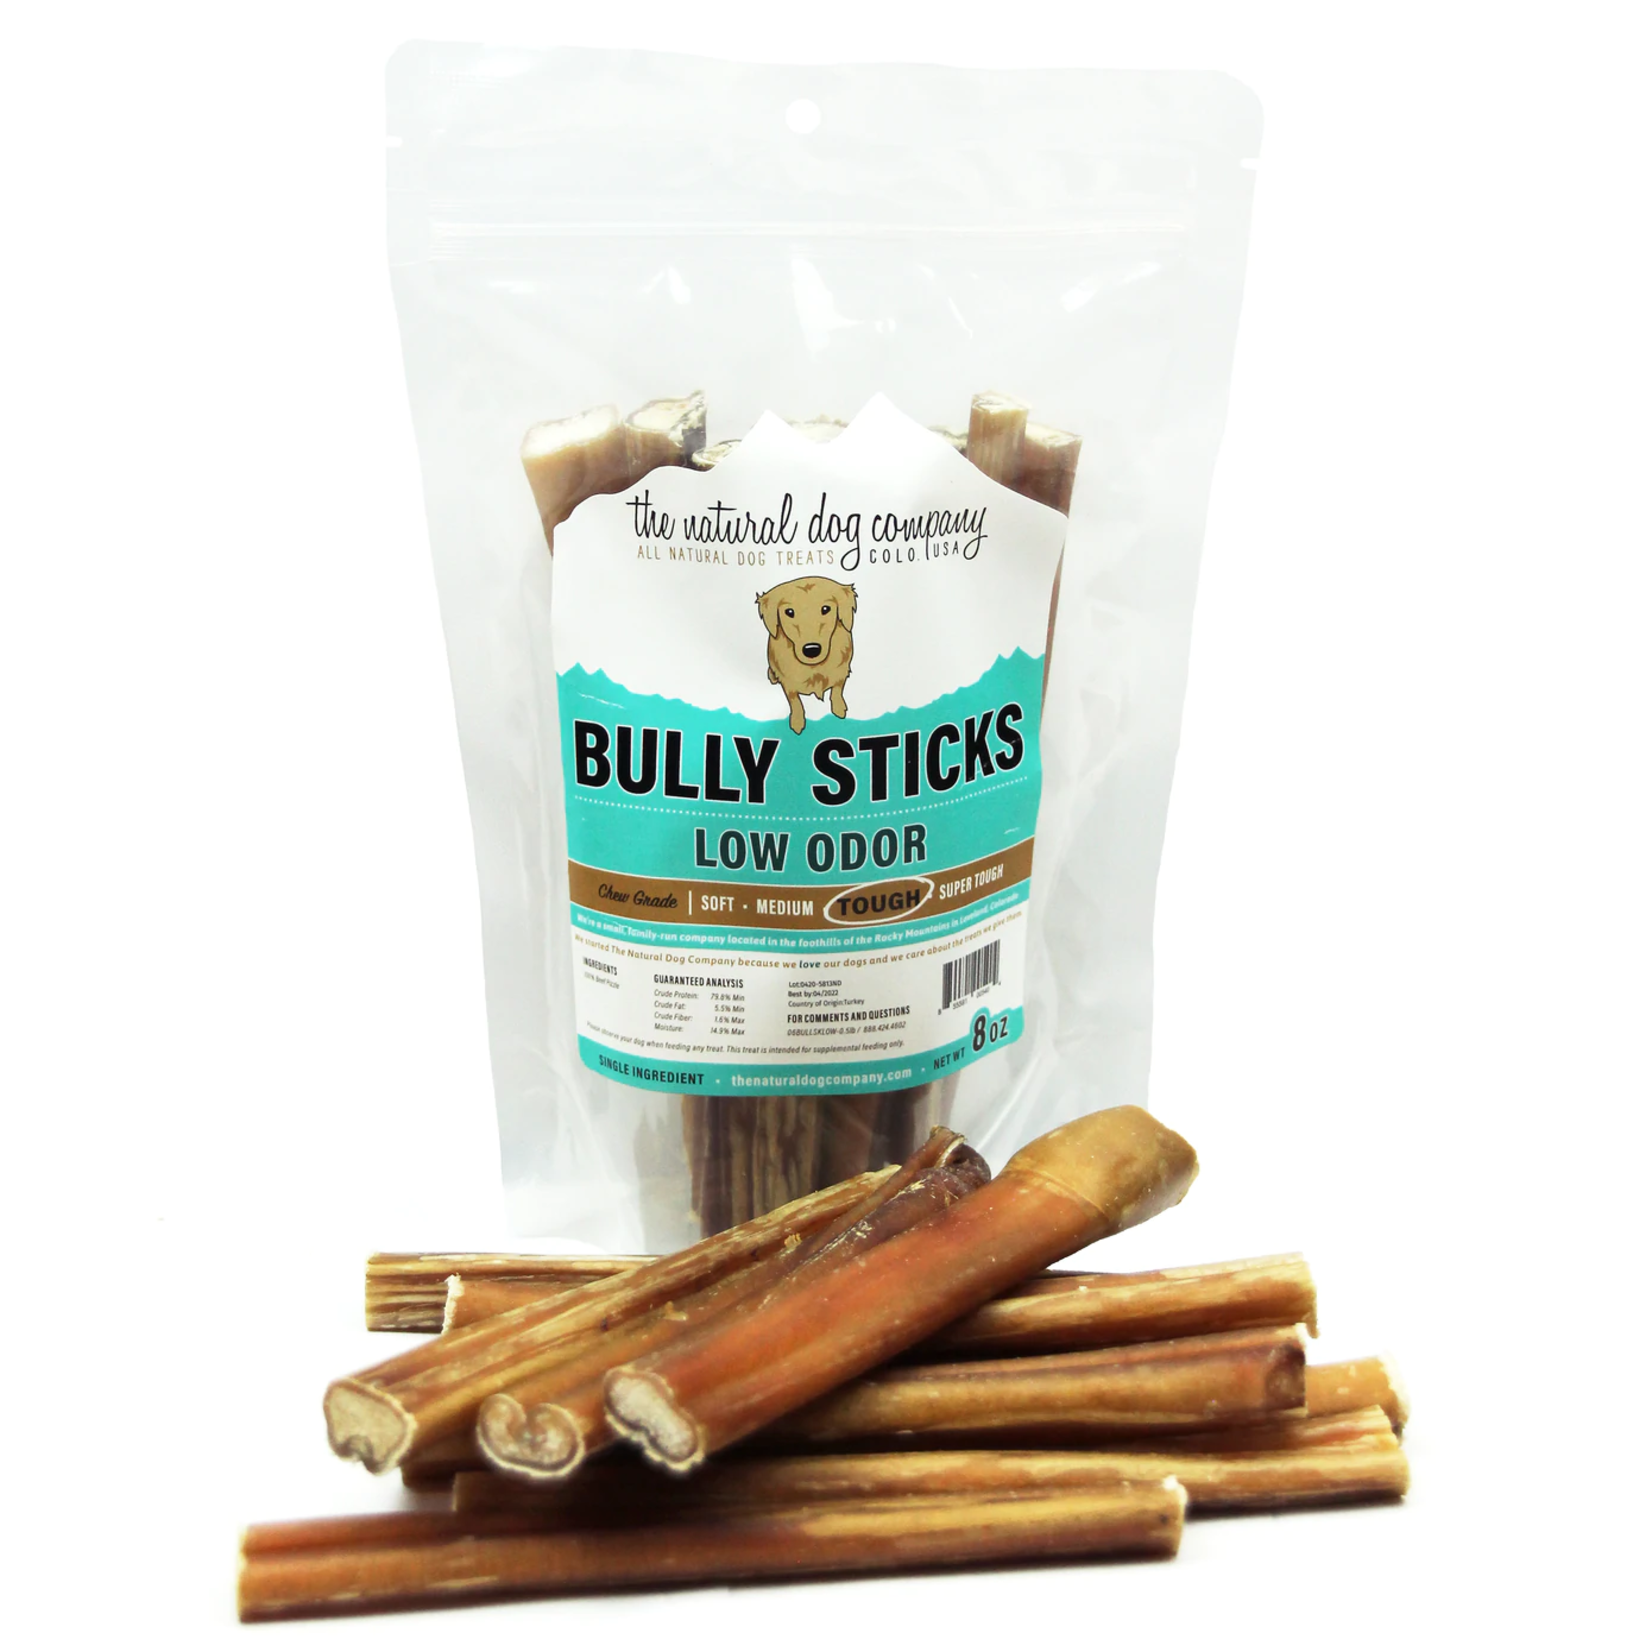 Tuesday's Natural Dog Company Tuesday's Natural Dog Company 6" Bully Sticks